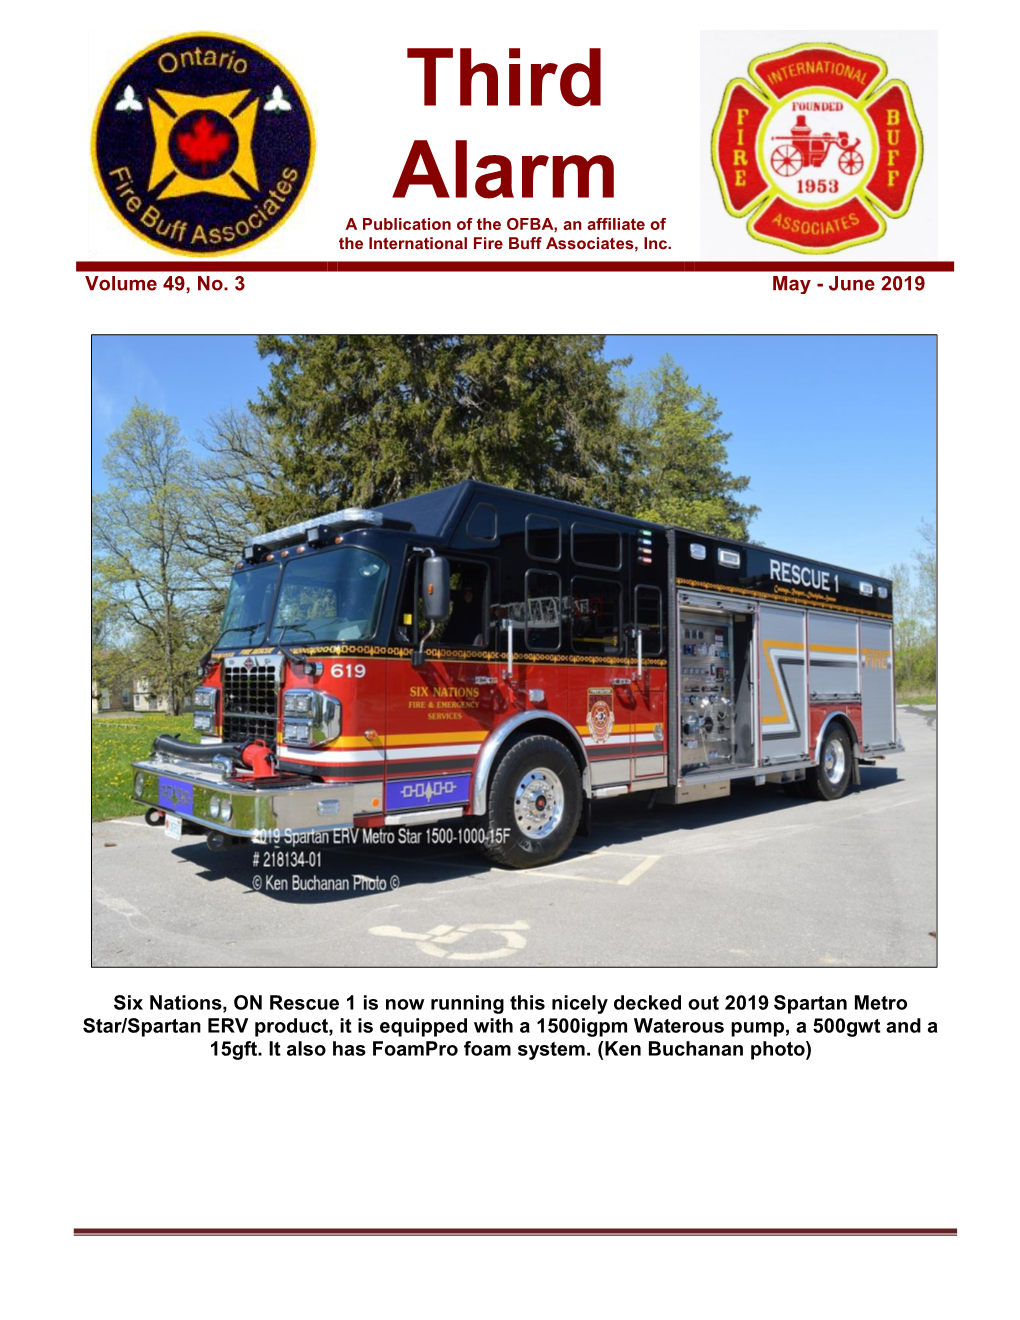 Third Alarm a Publication of the OFBA, an Affiliate of the International Fire Buff Associates, Inc